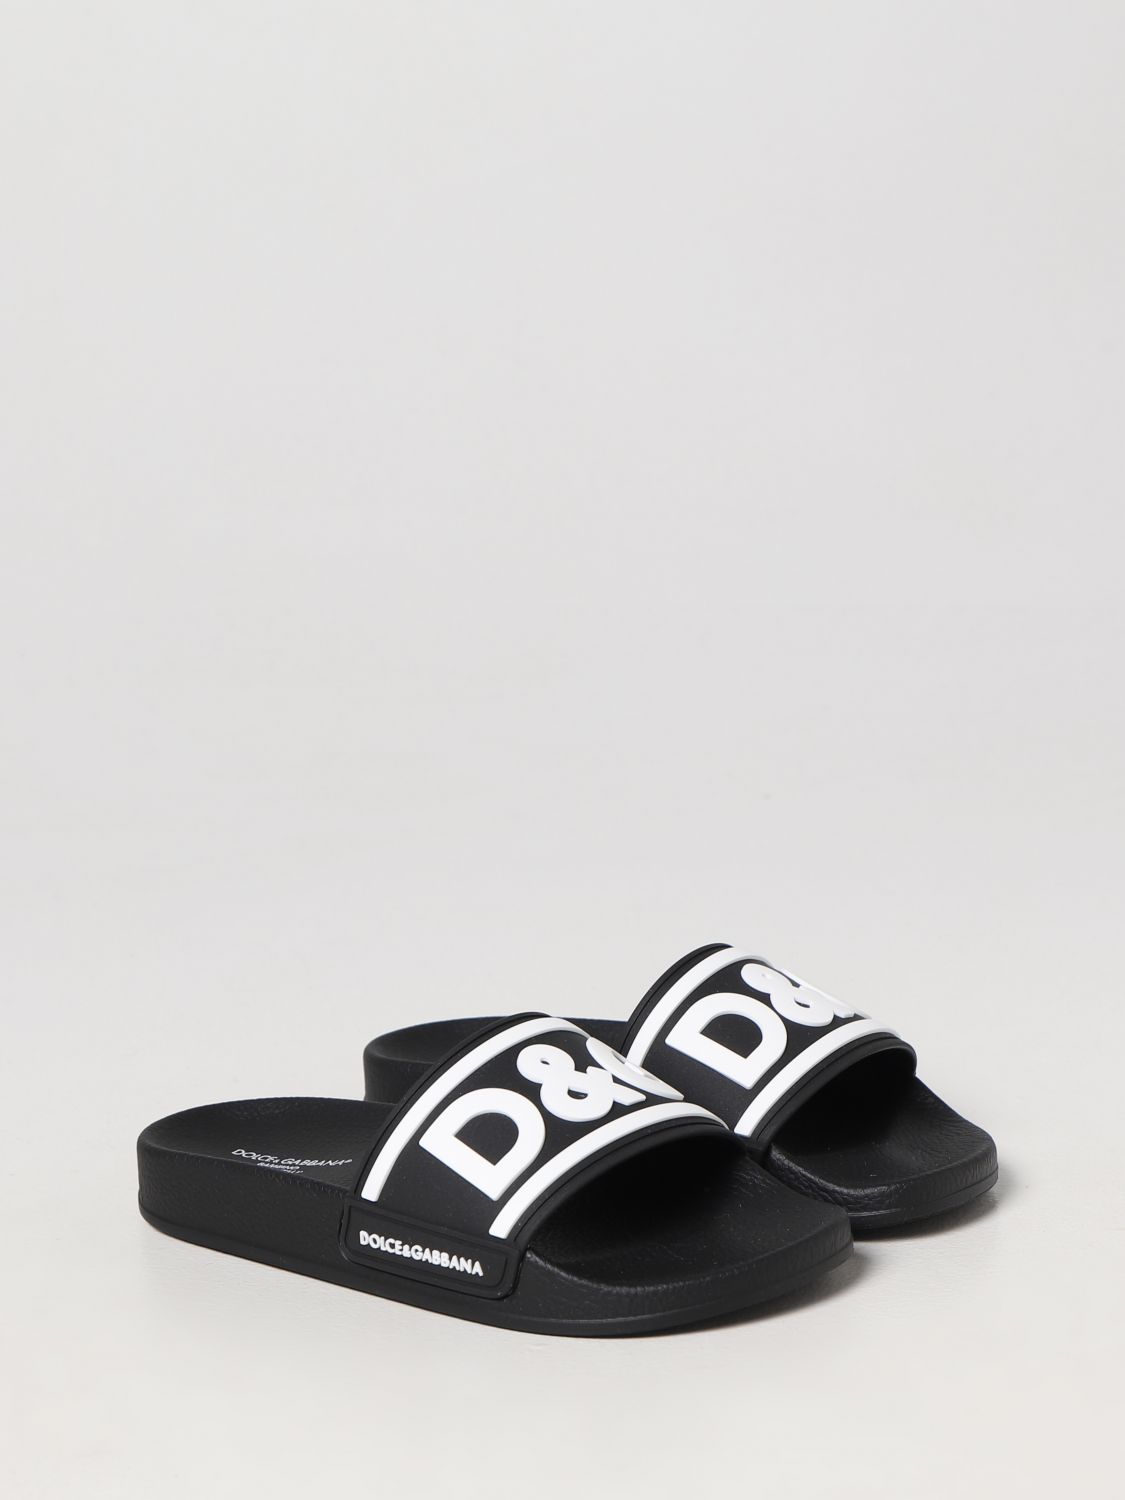 schedel Aan het liegen Persona DOLCE & GABBANA: shoes for girls - Black | Dolce & Gabbana shoes  DD0320AQ858 online on GIGLIO.COM